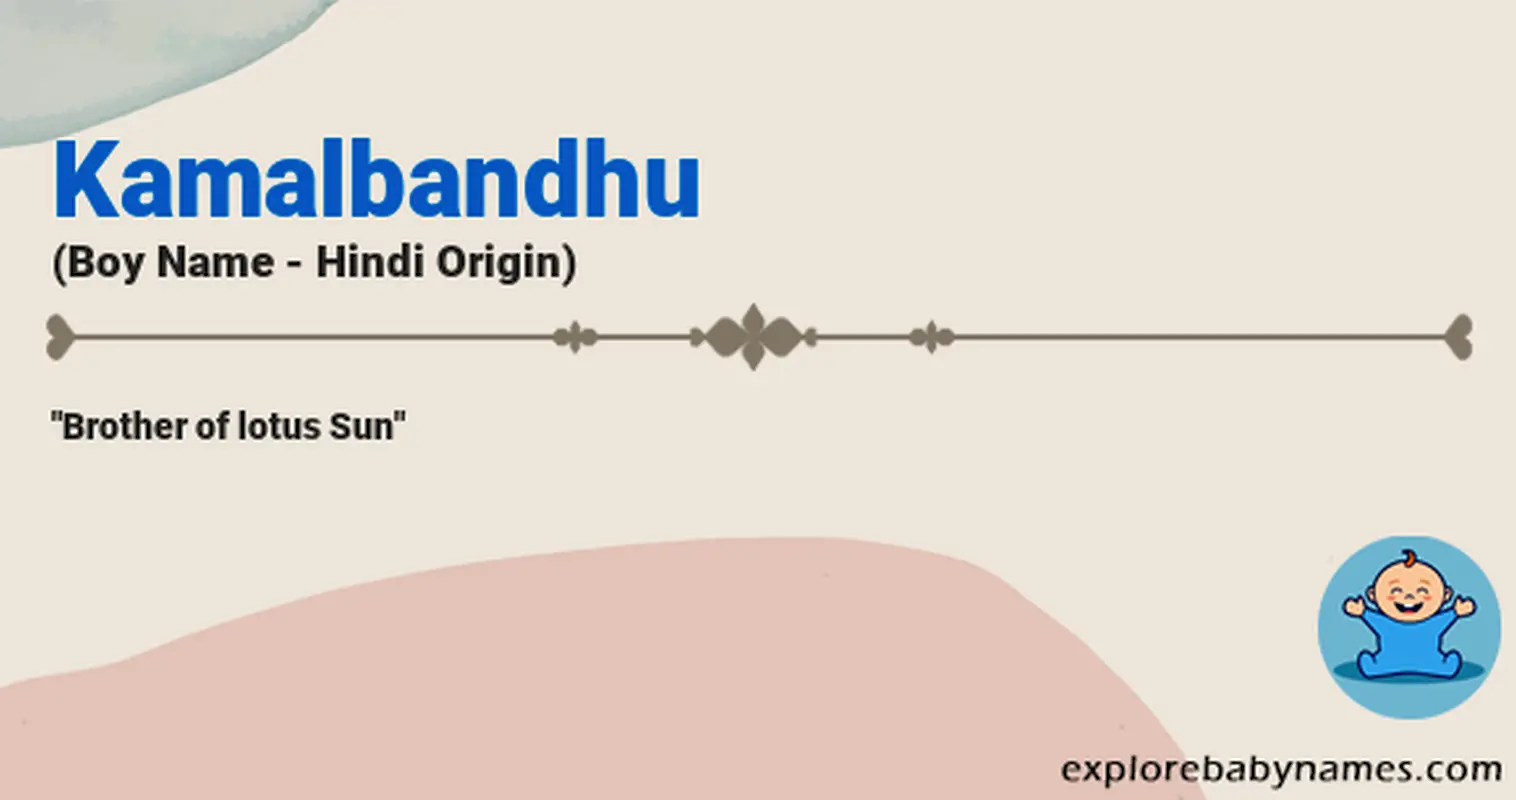 Meaning of Kamalbandhu